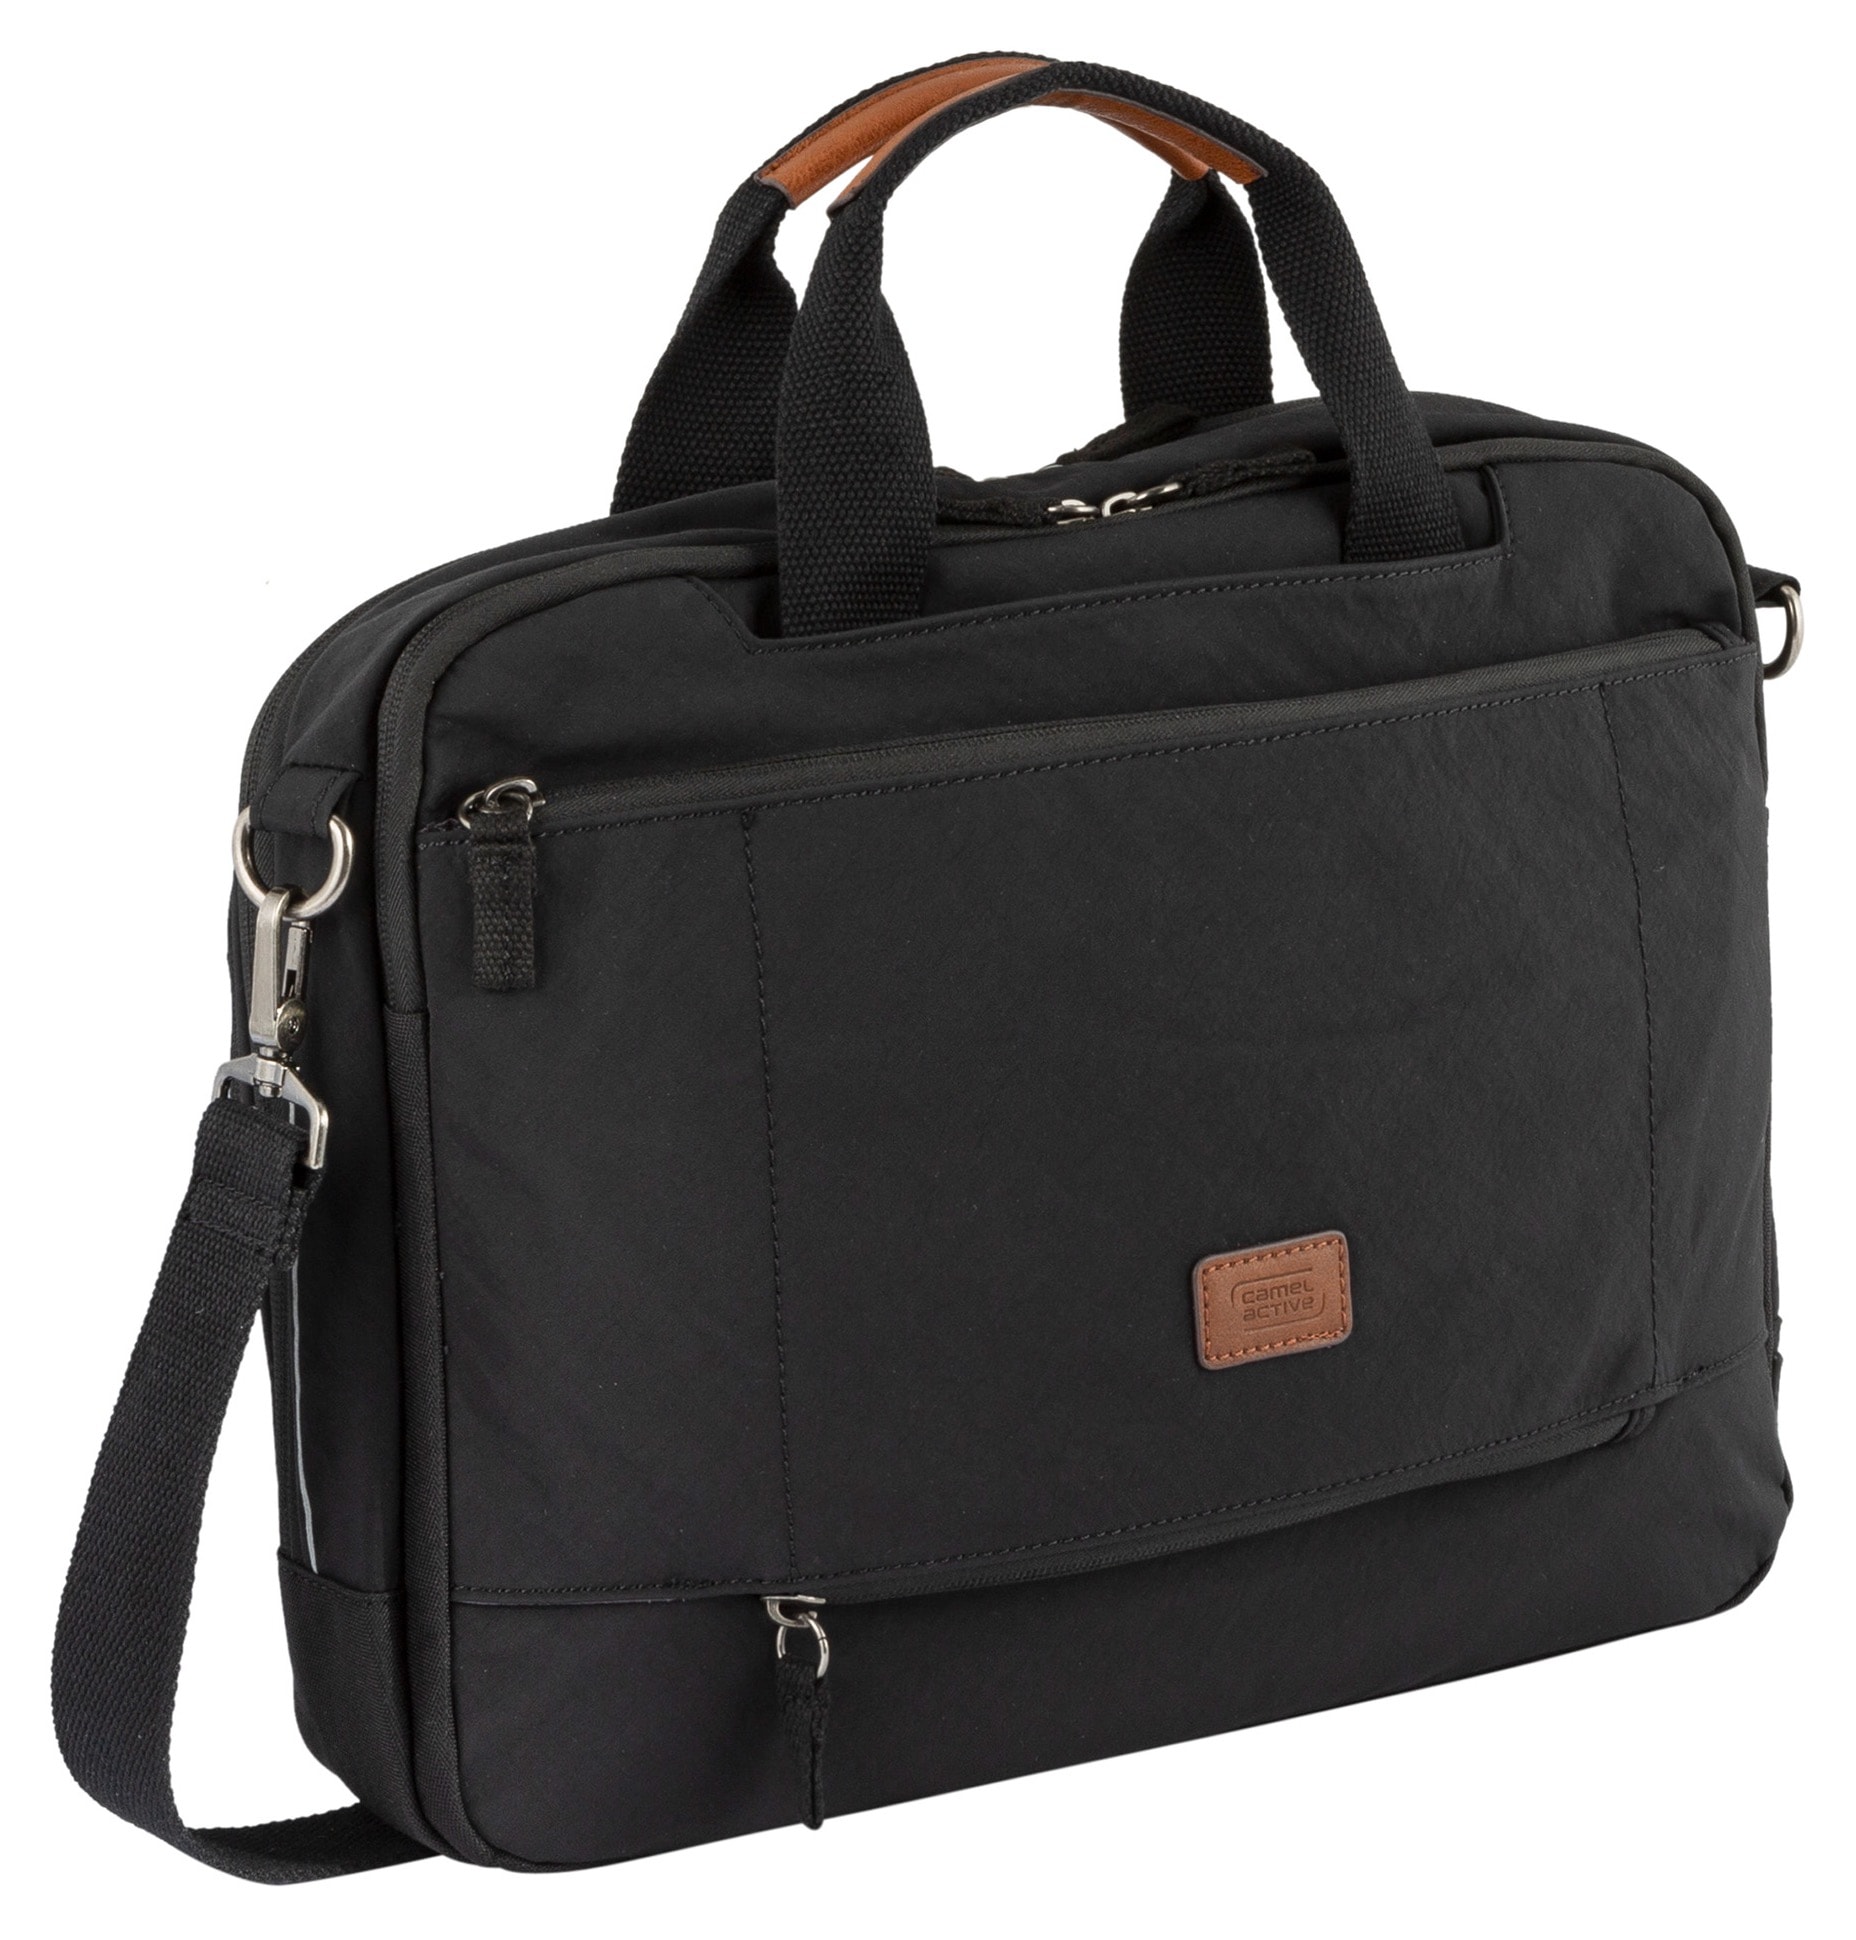 im camel Design Messenger active Bag Business praktischen »CITY BB bag«, bei